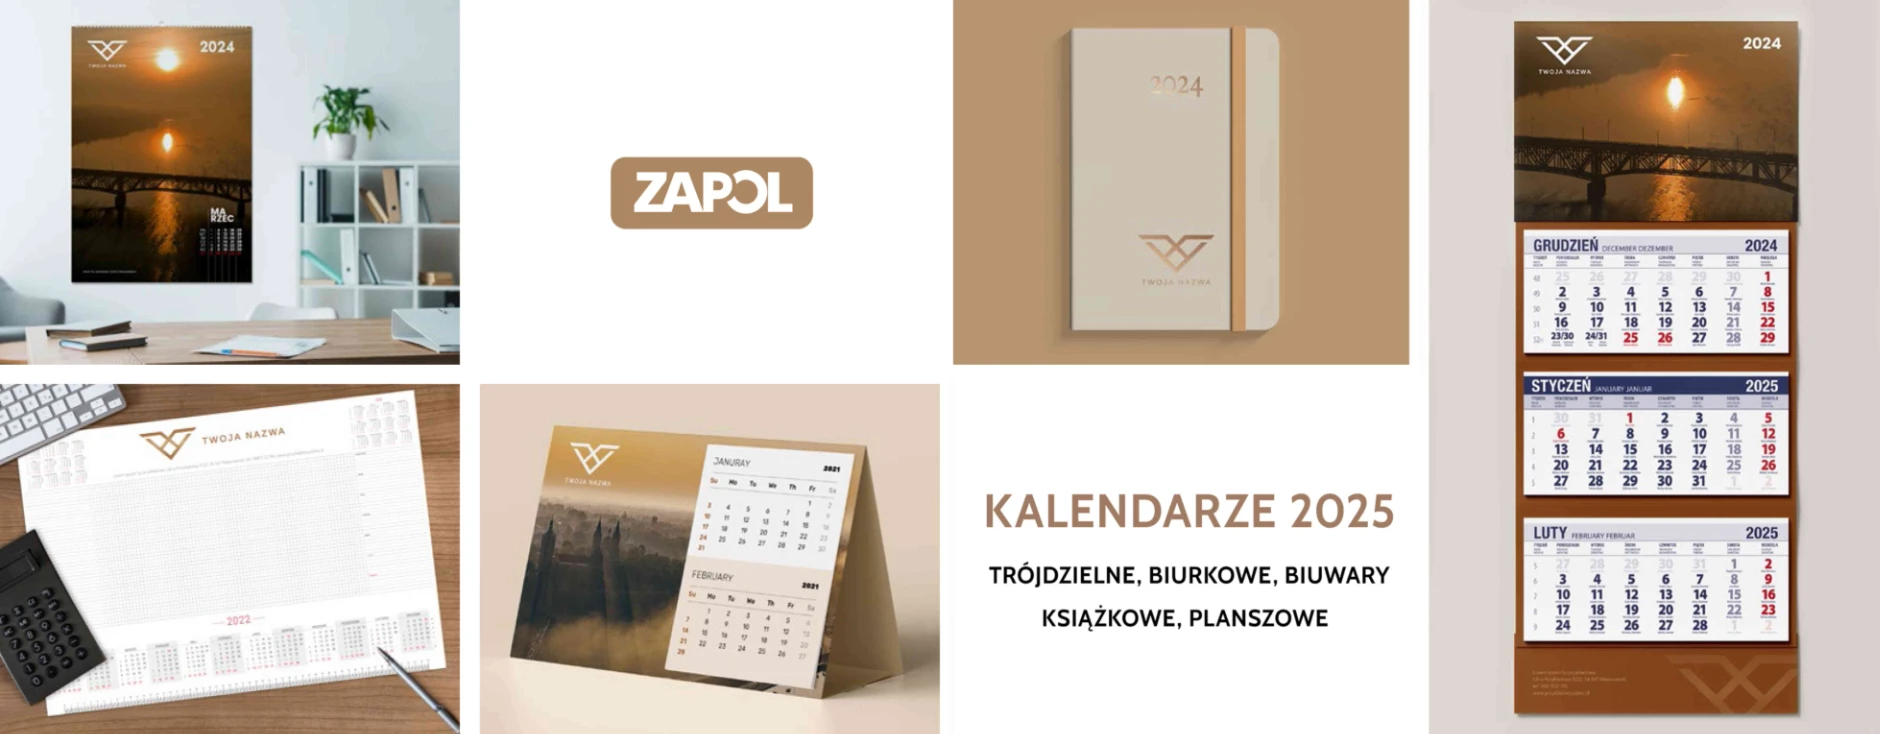 Kalendarze 2025 drukarnia Szczecin Zapol